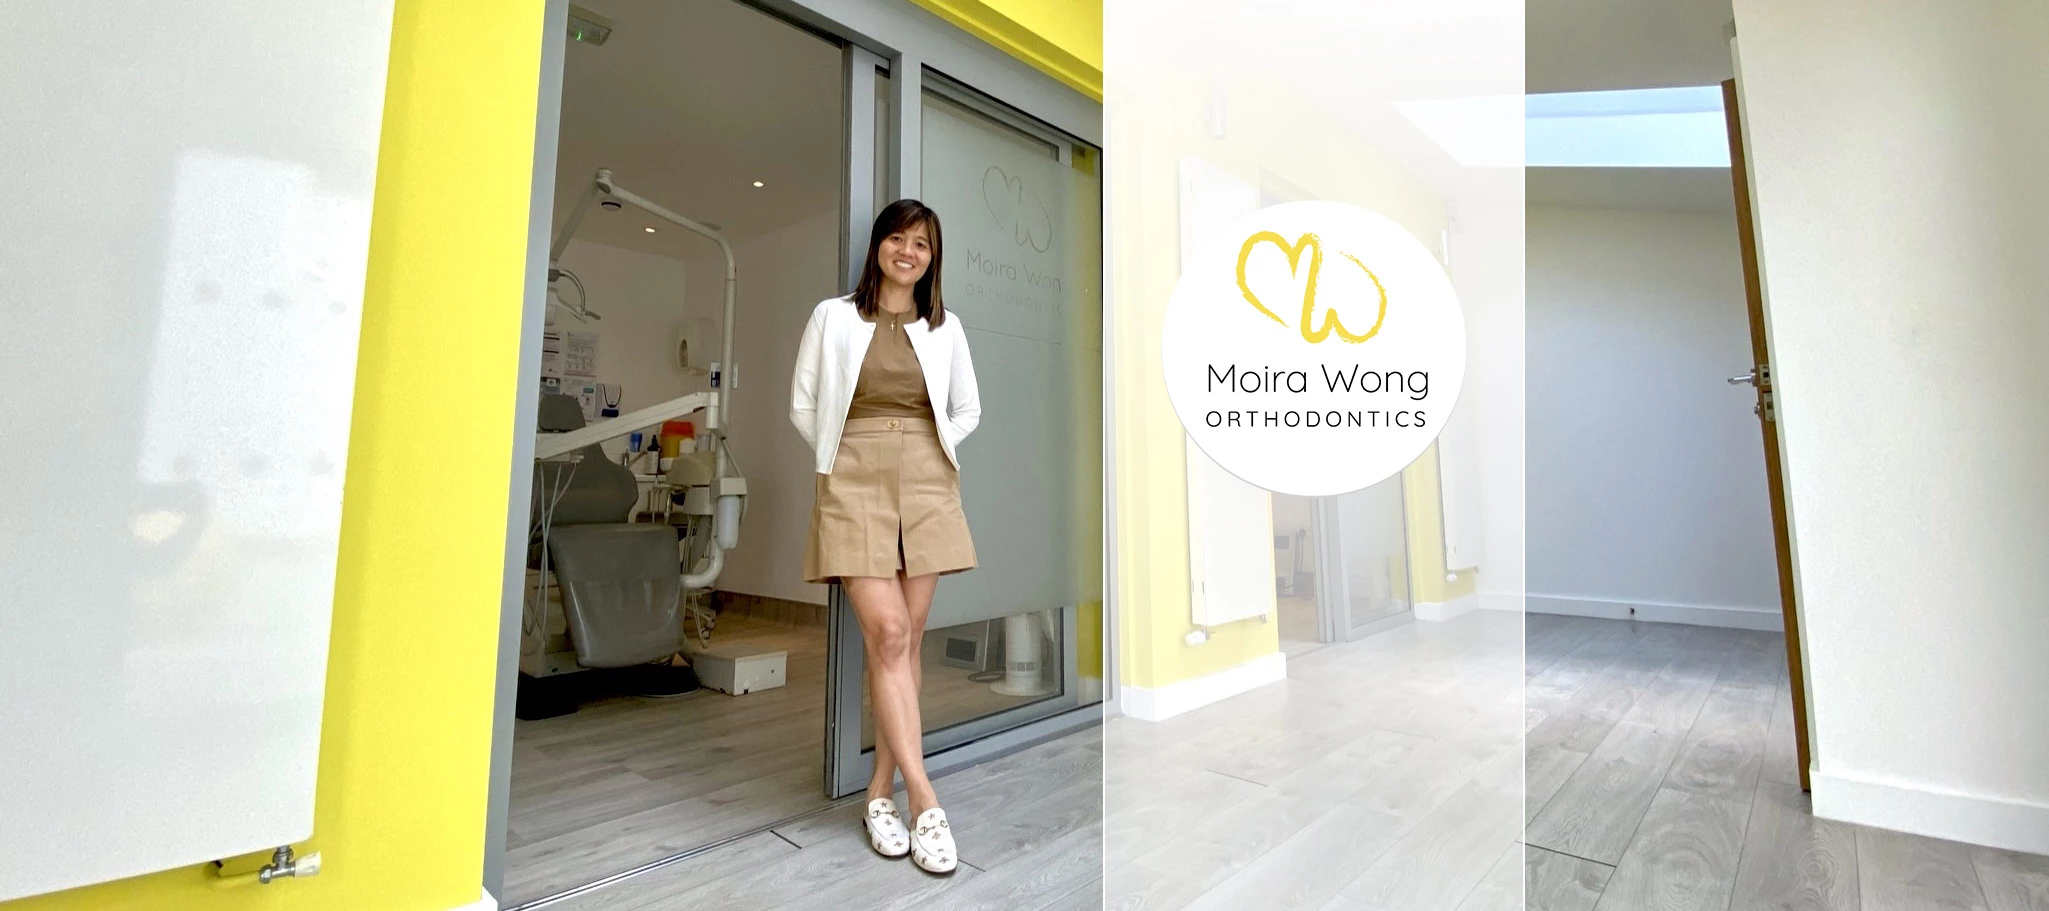 Moira-Wong-Orthodontics-Kensington-London-Home-Page-Banner